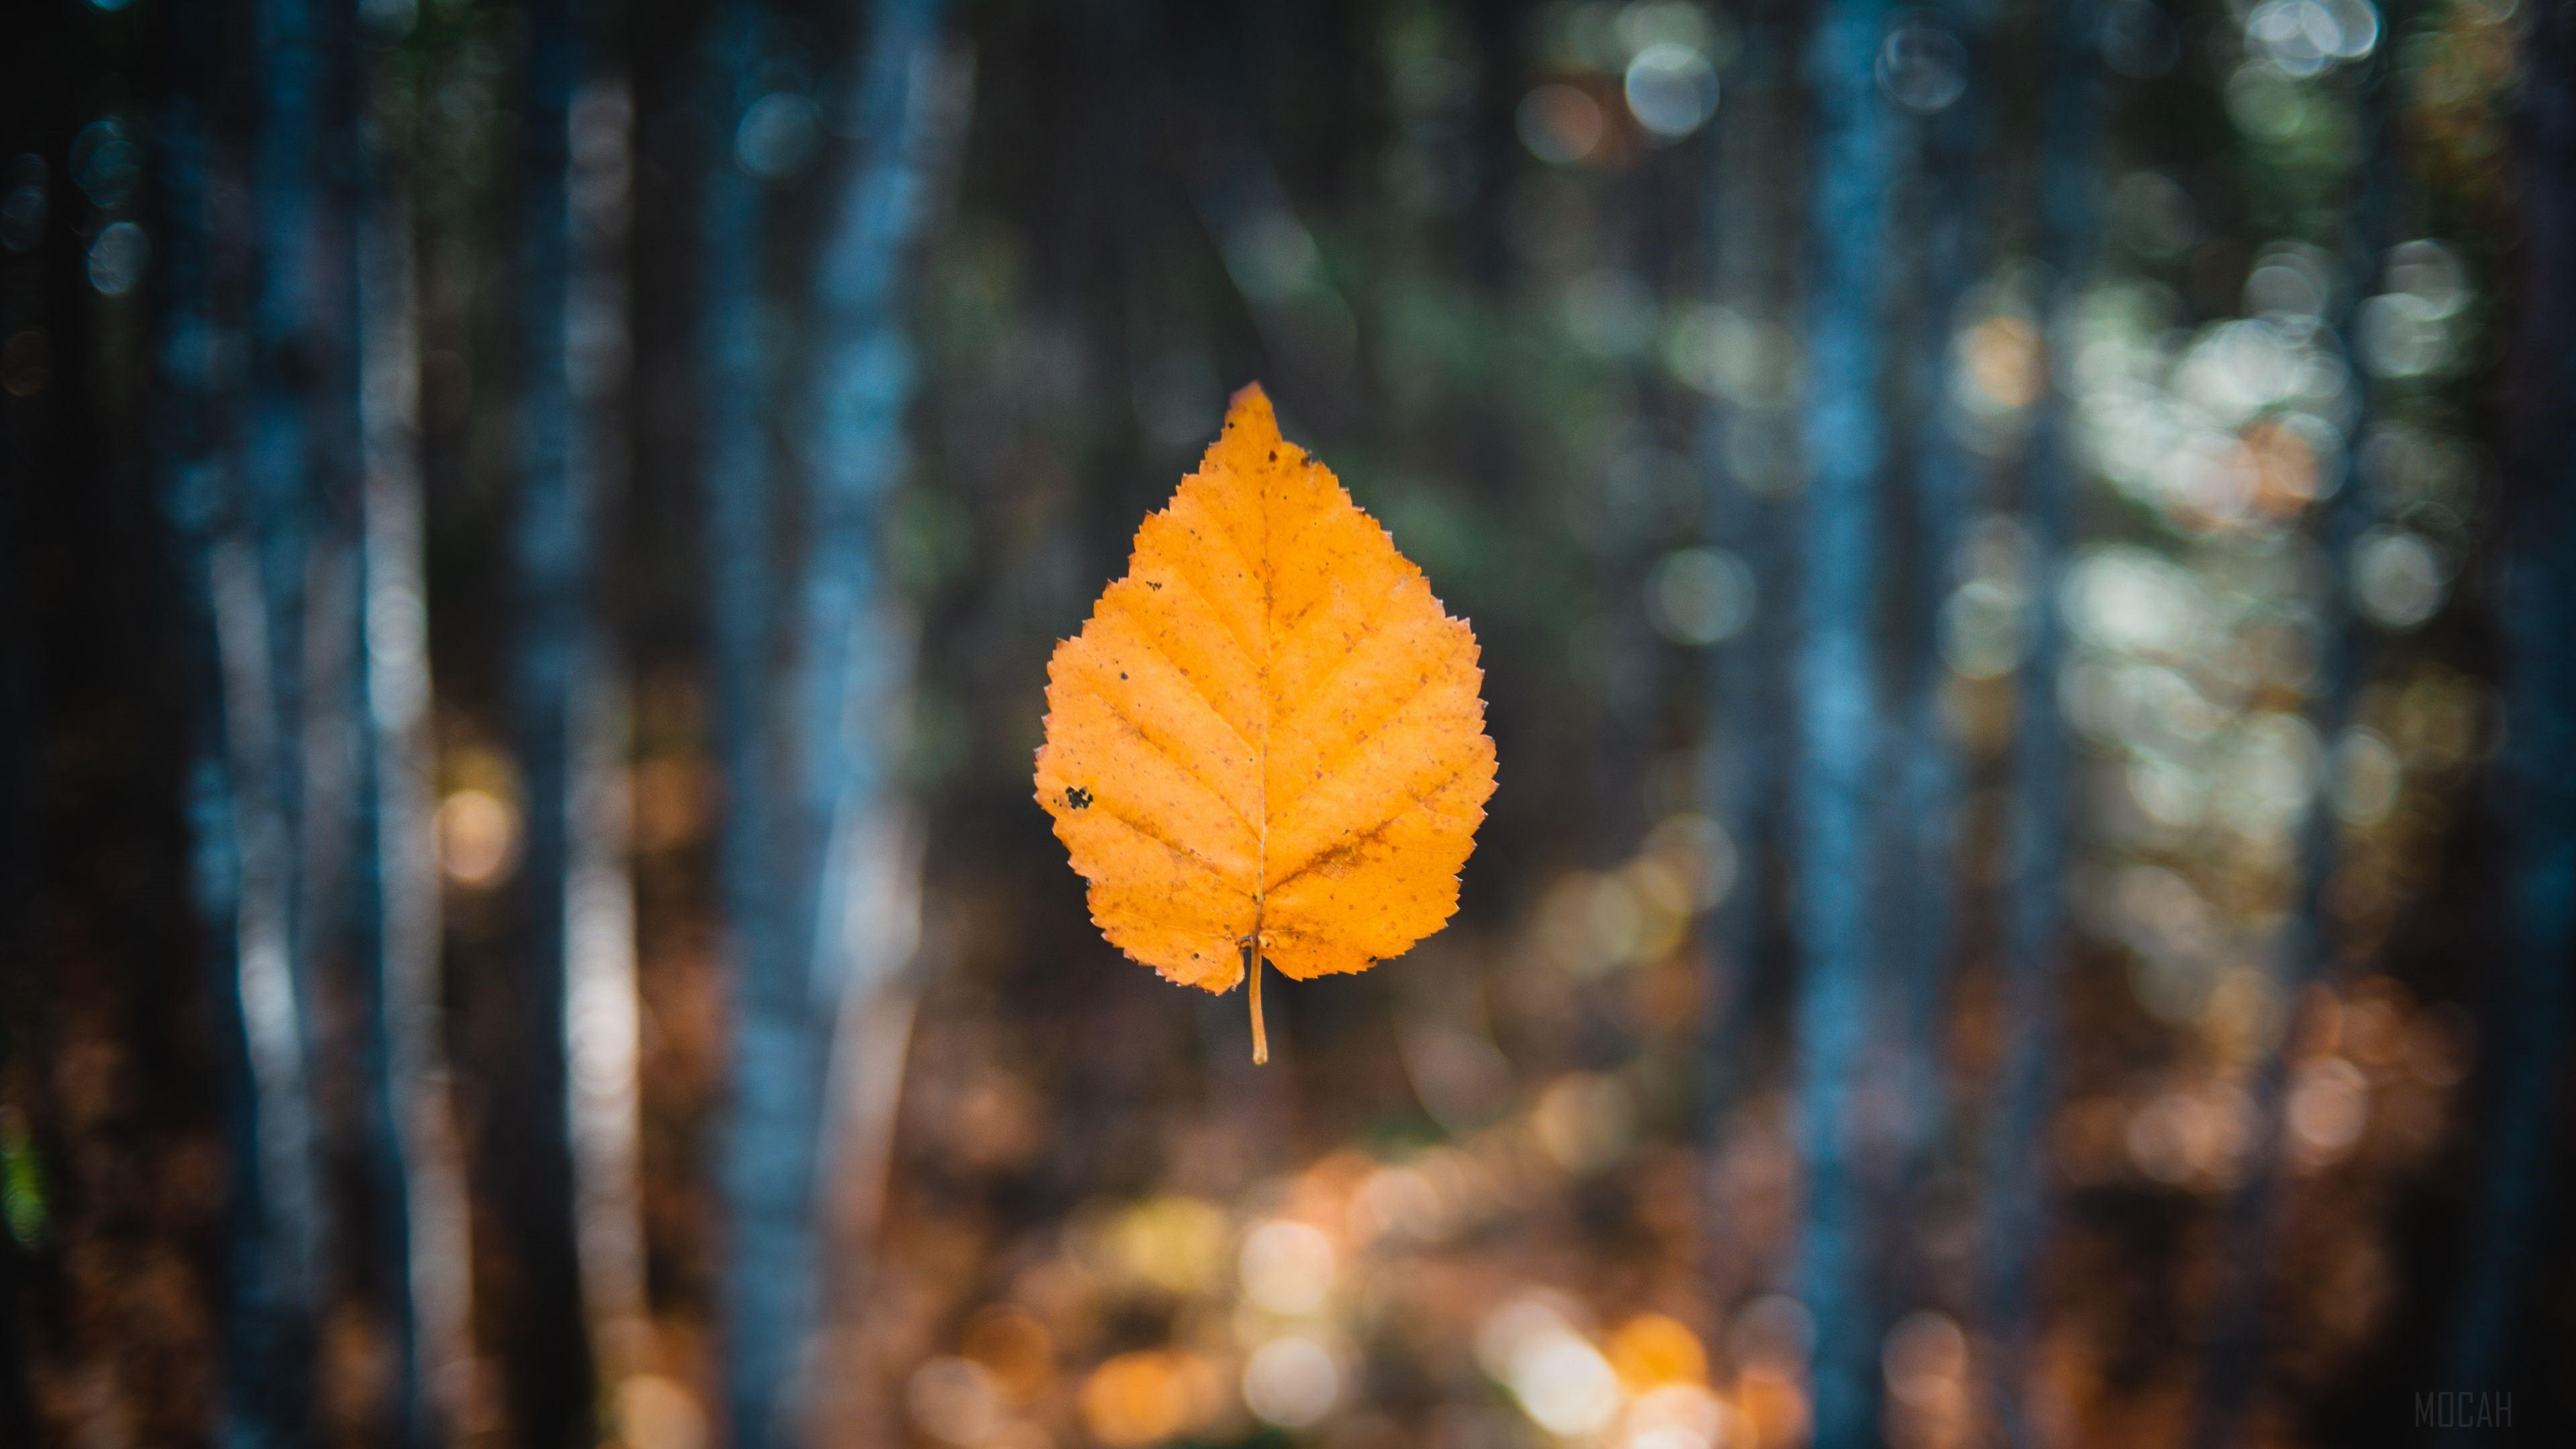 HD wallpaper, Falling Autumn Leaf 4K